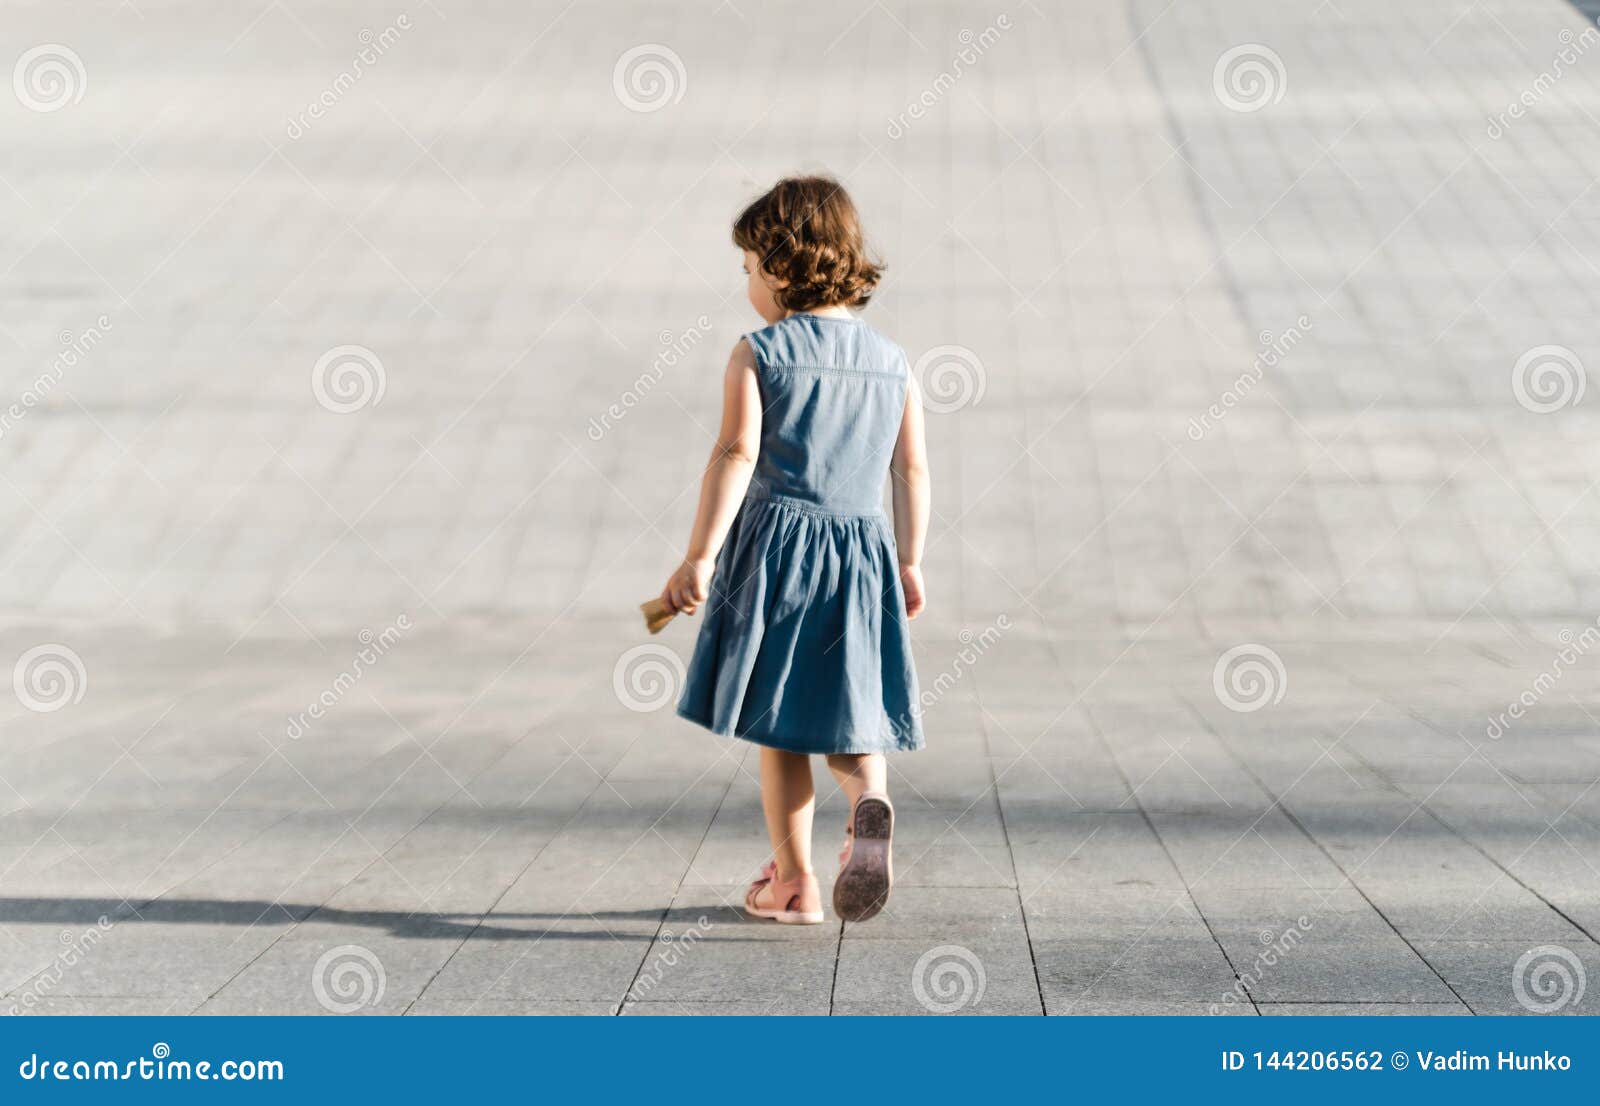 Childhood concept. Cute preschool girl is running. Little cute girl is running away and having fun. Childhood concept